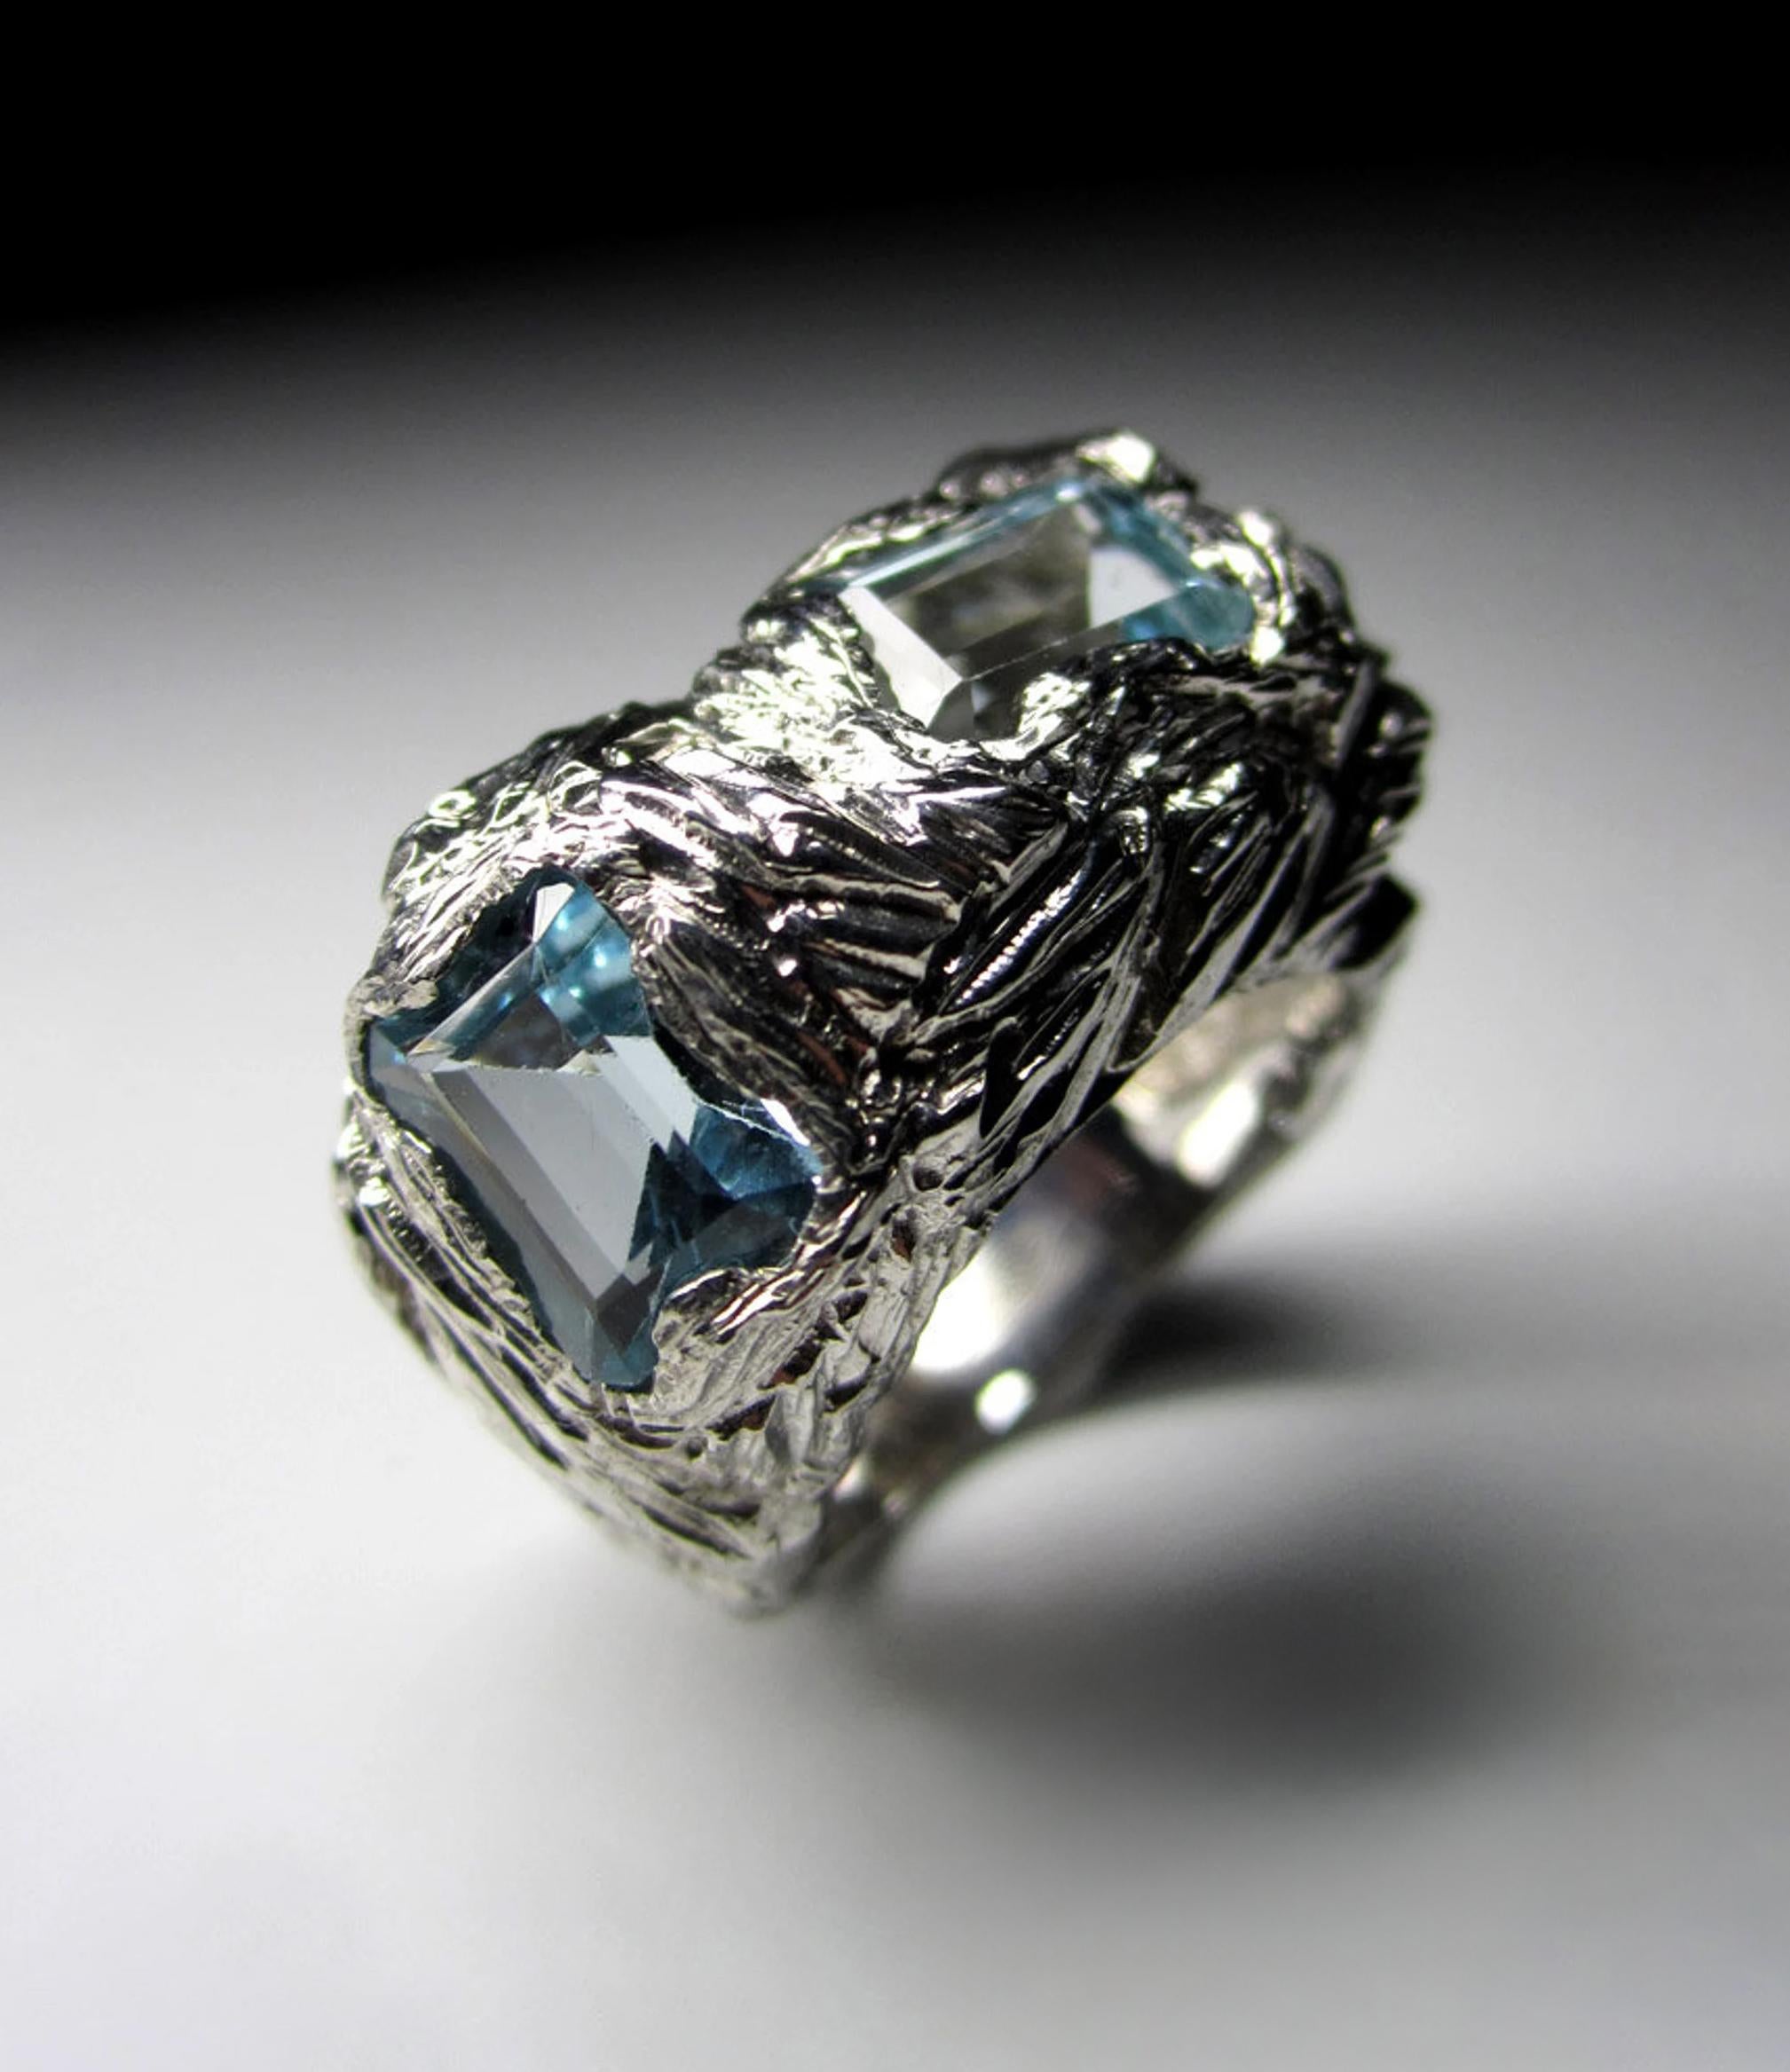 Silver ring with natural blue Topaz
topaz origin - Brazil
stone measurements - 0.16 х 0.24 х 0.31 in / 4 х 6 х 8 mm
stone weight - 6 carats
ring weight - 11.43 grams
ring size - 6.25 US